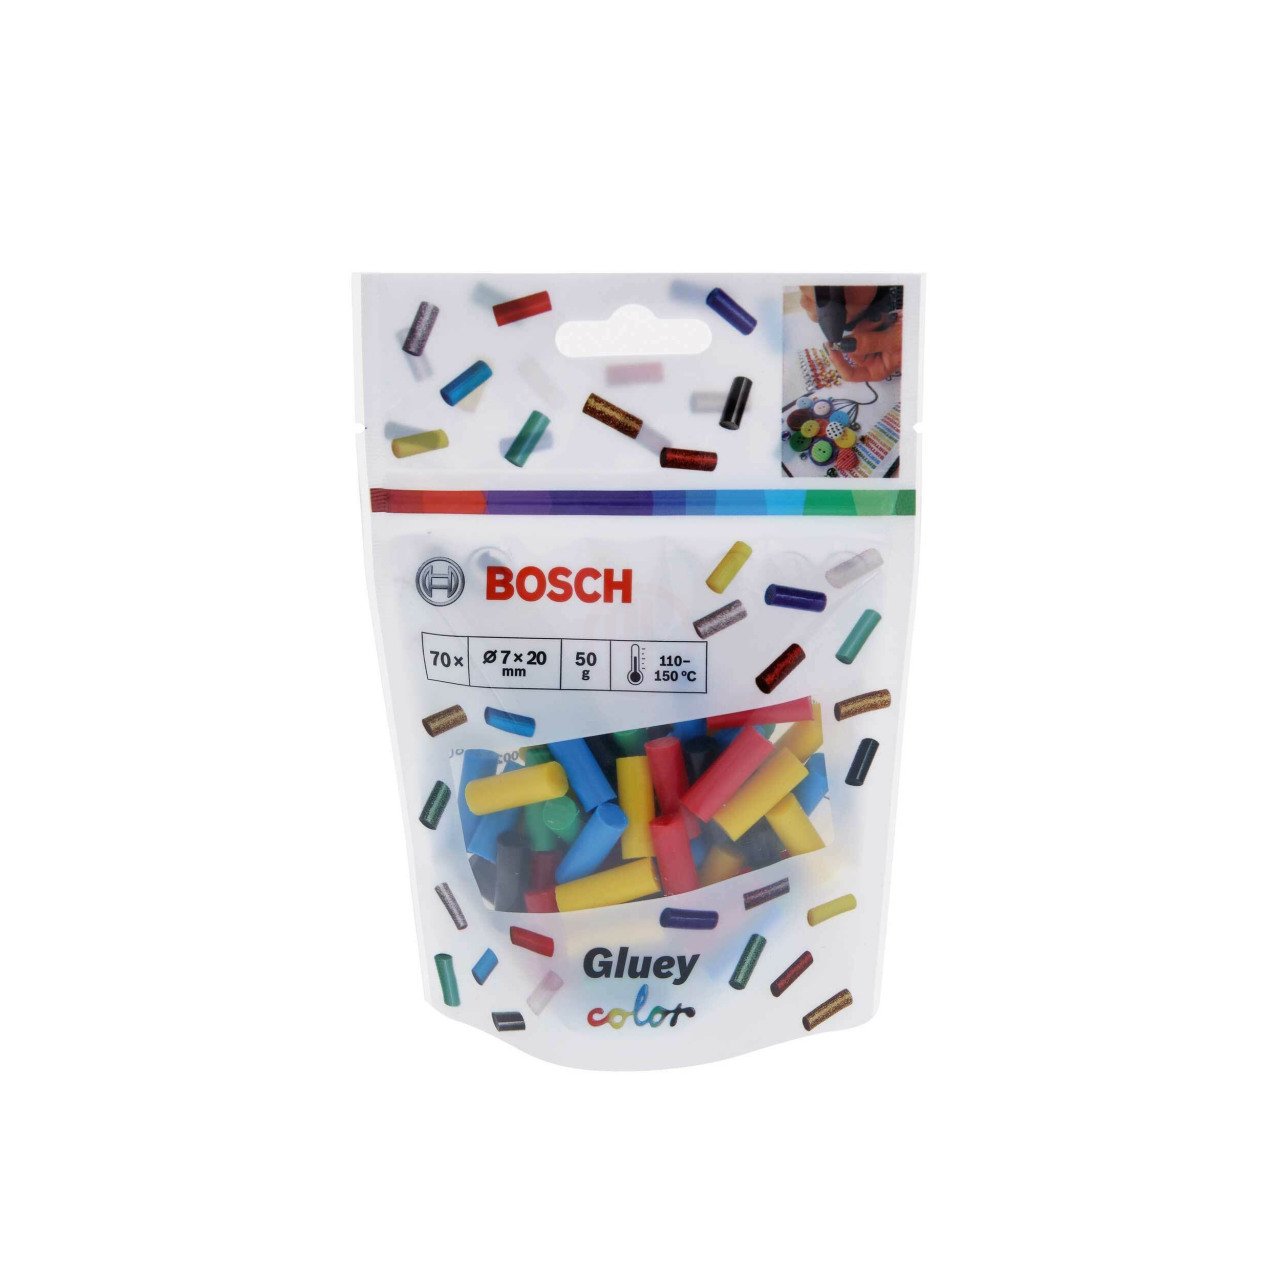 Bosch Tutkal Çubuğu 7x20 mm 50 Gr Renkli (70 Adet) (Gluey) - 2608002005